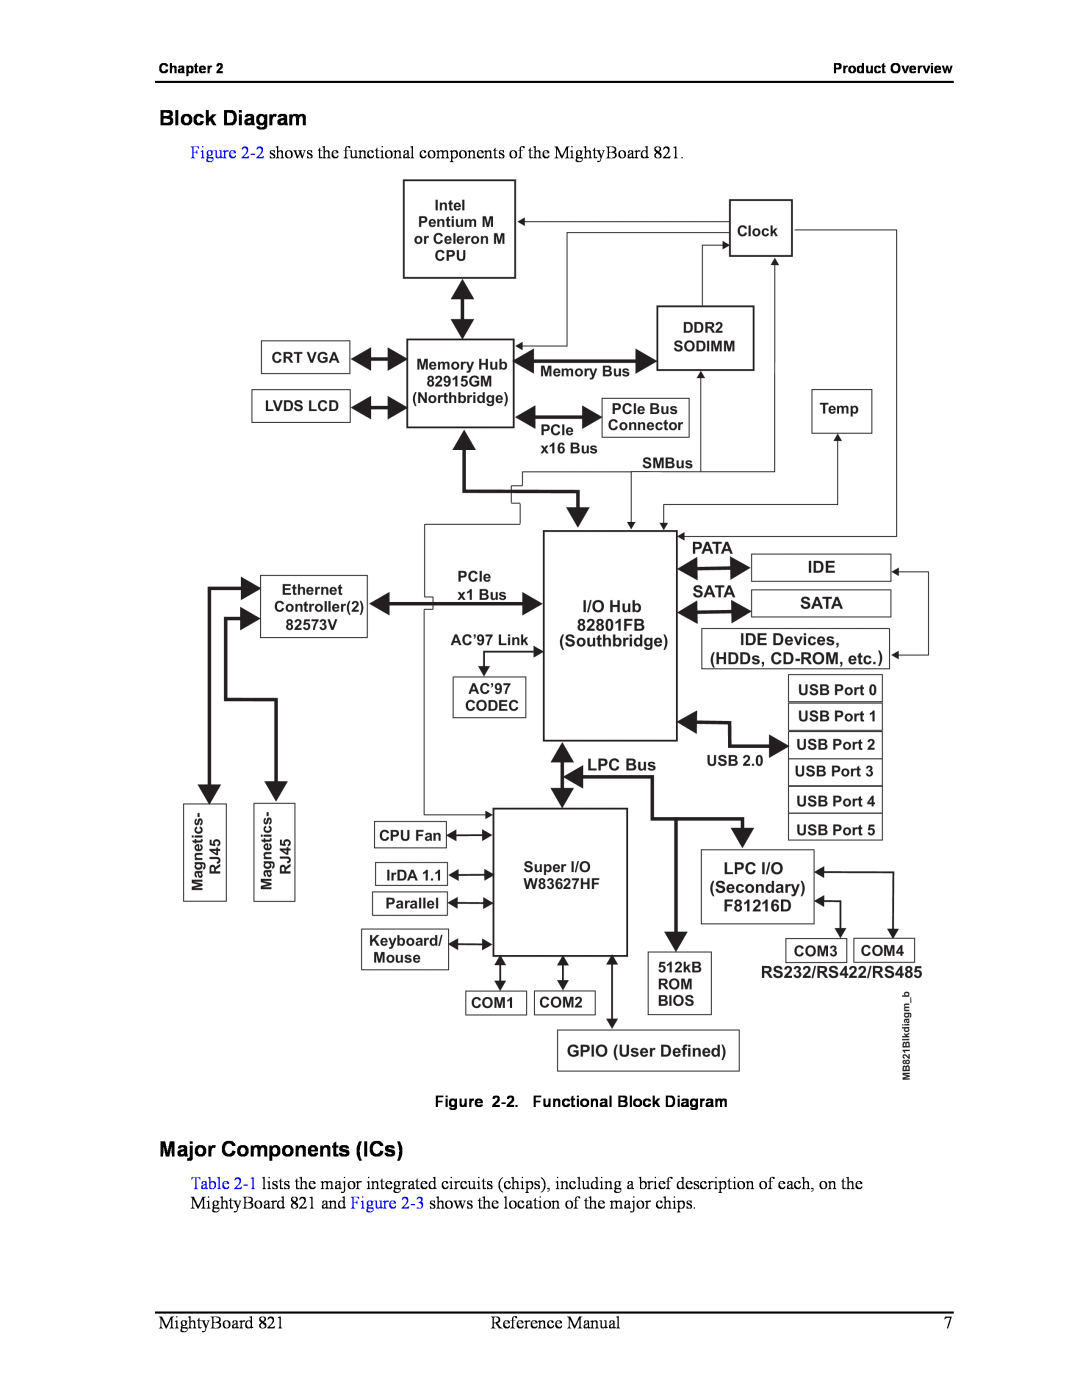 Ampro Corporation MightyBoard 821 manual Block Diagram, Major Components ICs 